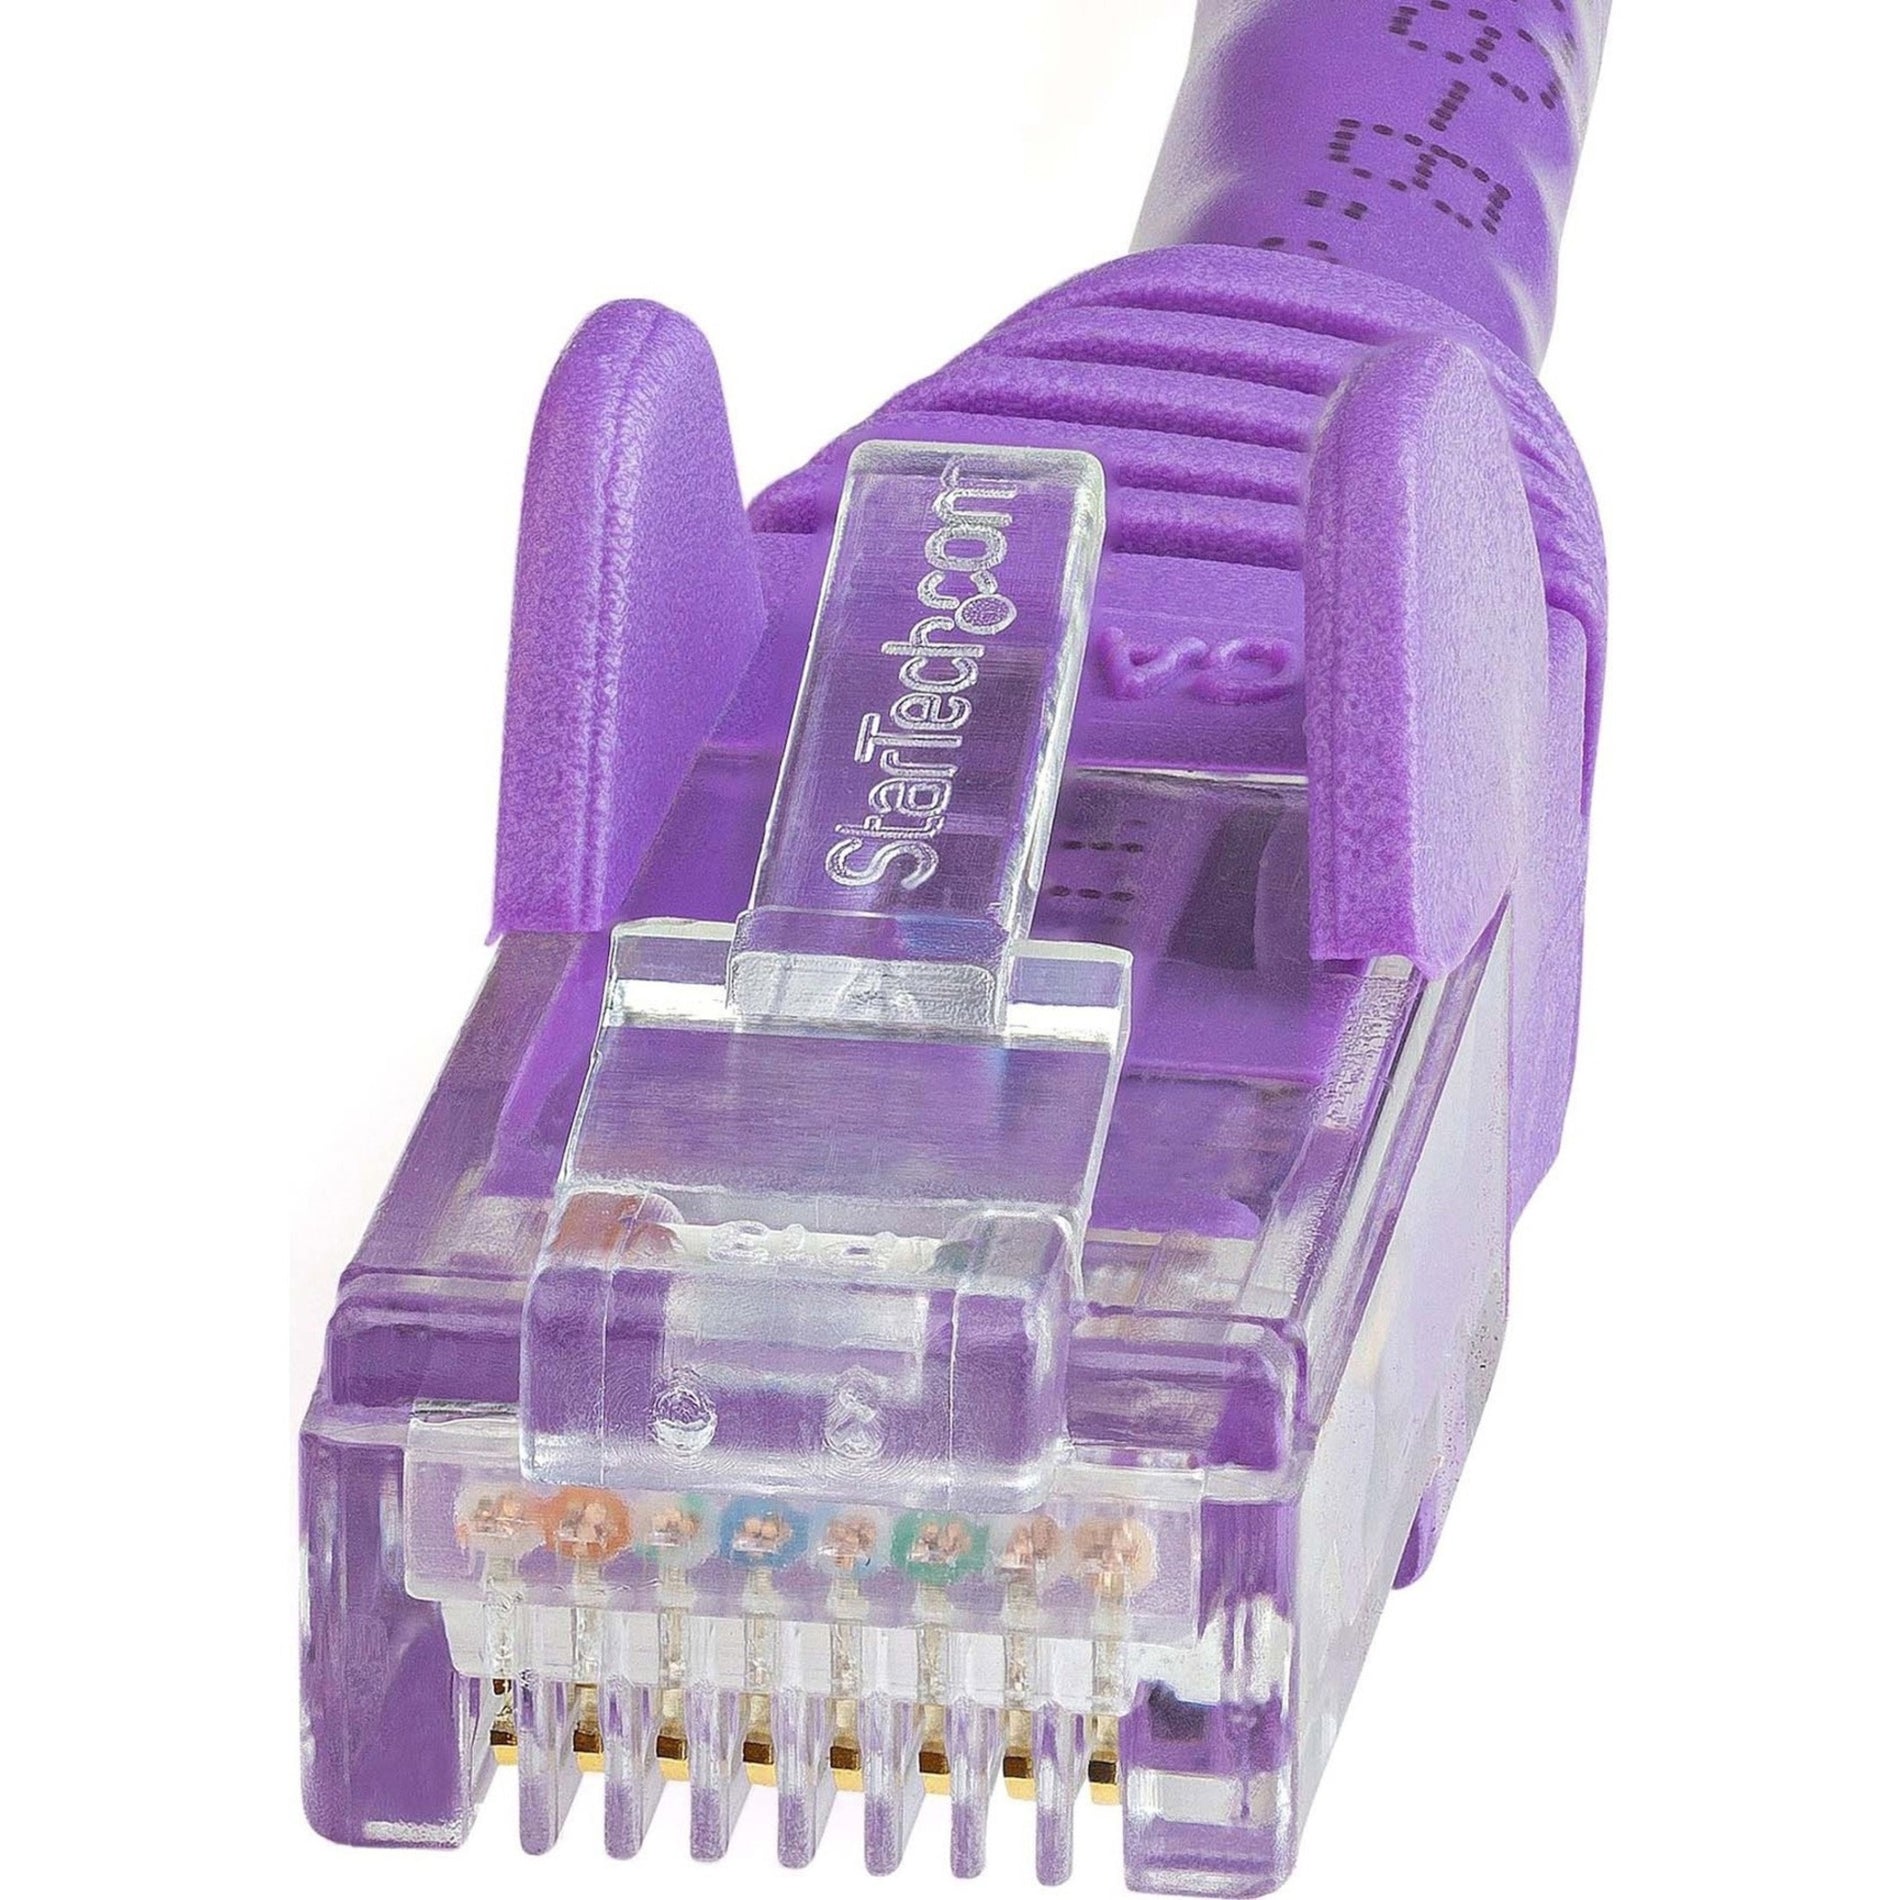 StarTech.com N6PATCH20PL Cat6 Patch Cable, 20ft Purple Ethernet Cable with Snagless RJ45 Connectors